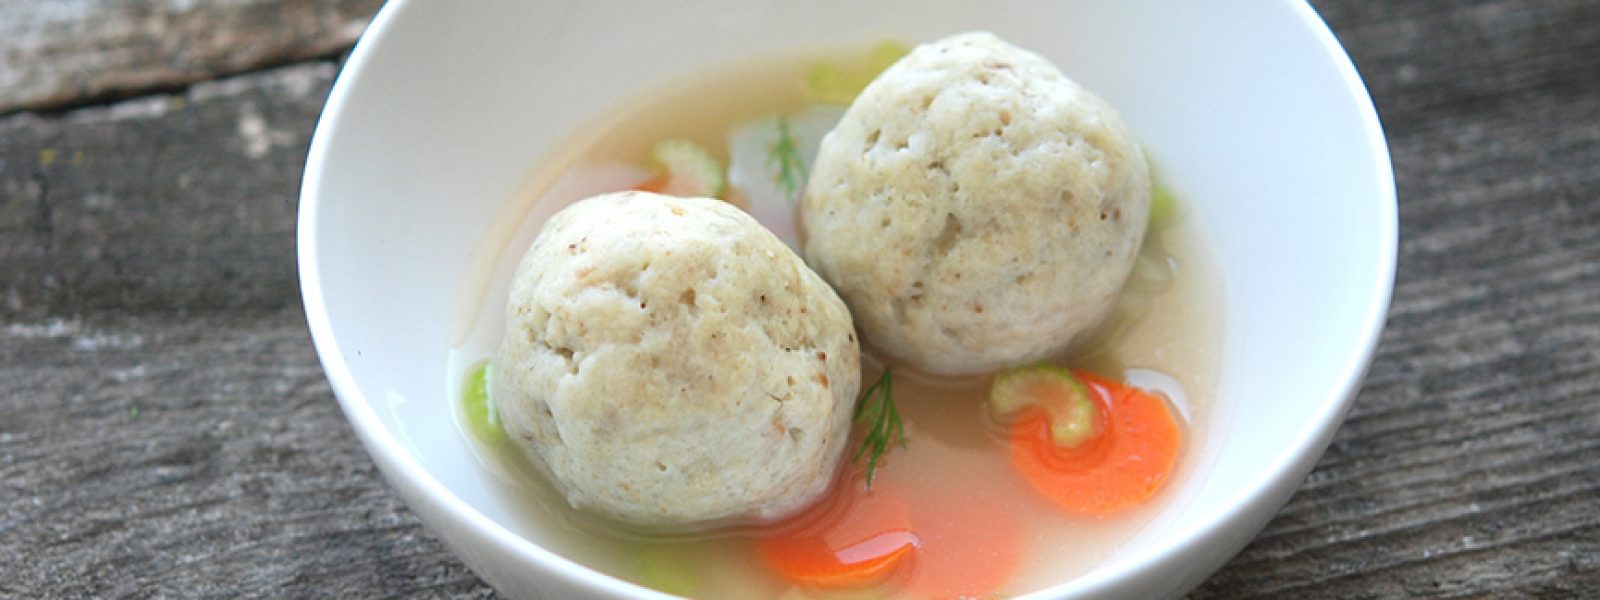 Matzoh Ball Soup|||Dill-Marinated Herring